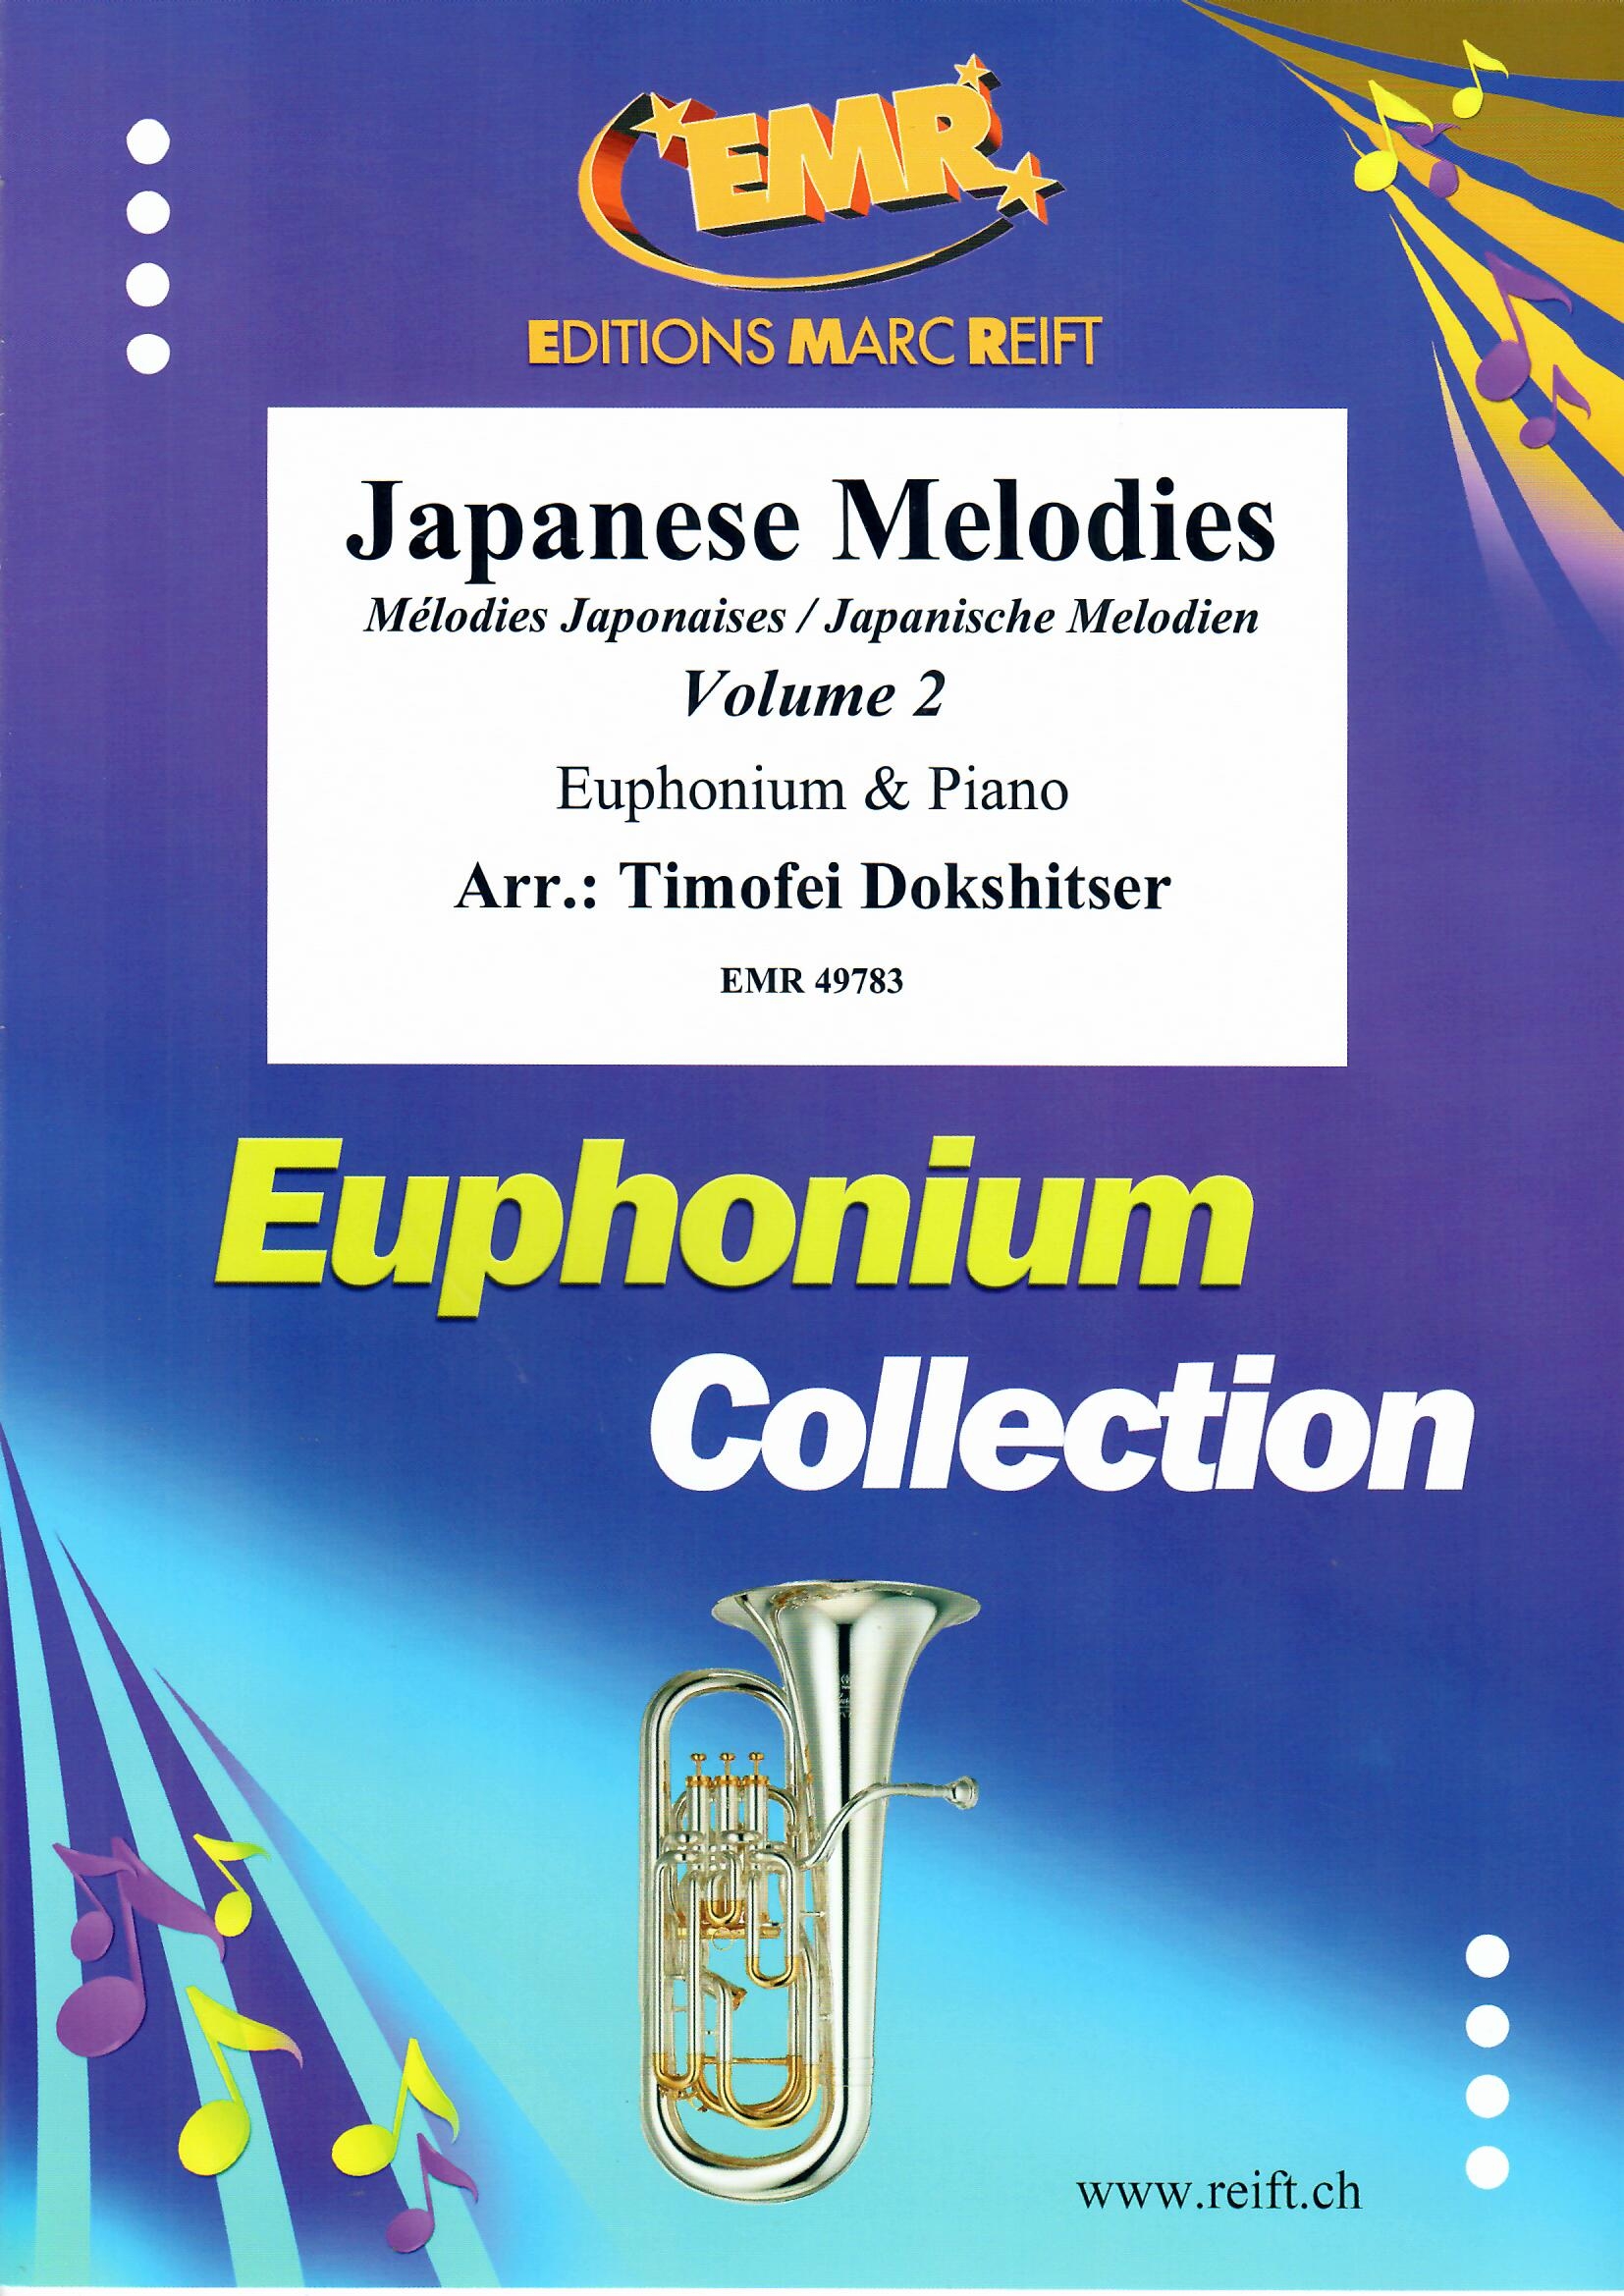 JAPANESE MELODIES VOL. 2 - Euphonium & Piano